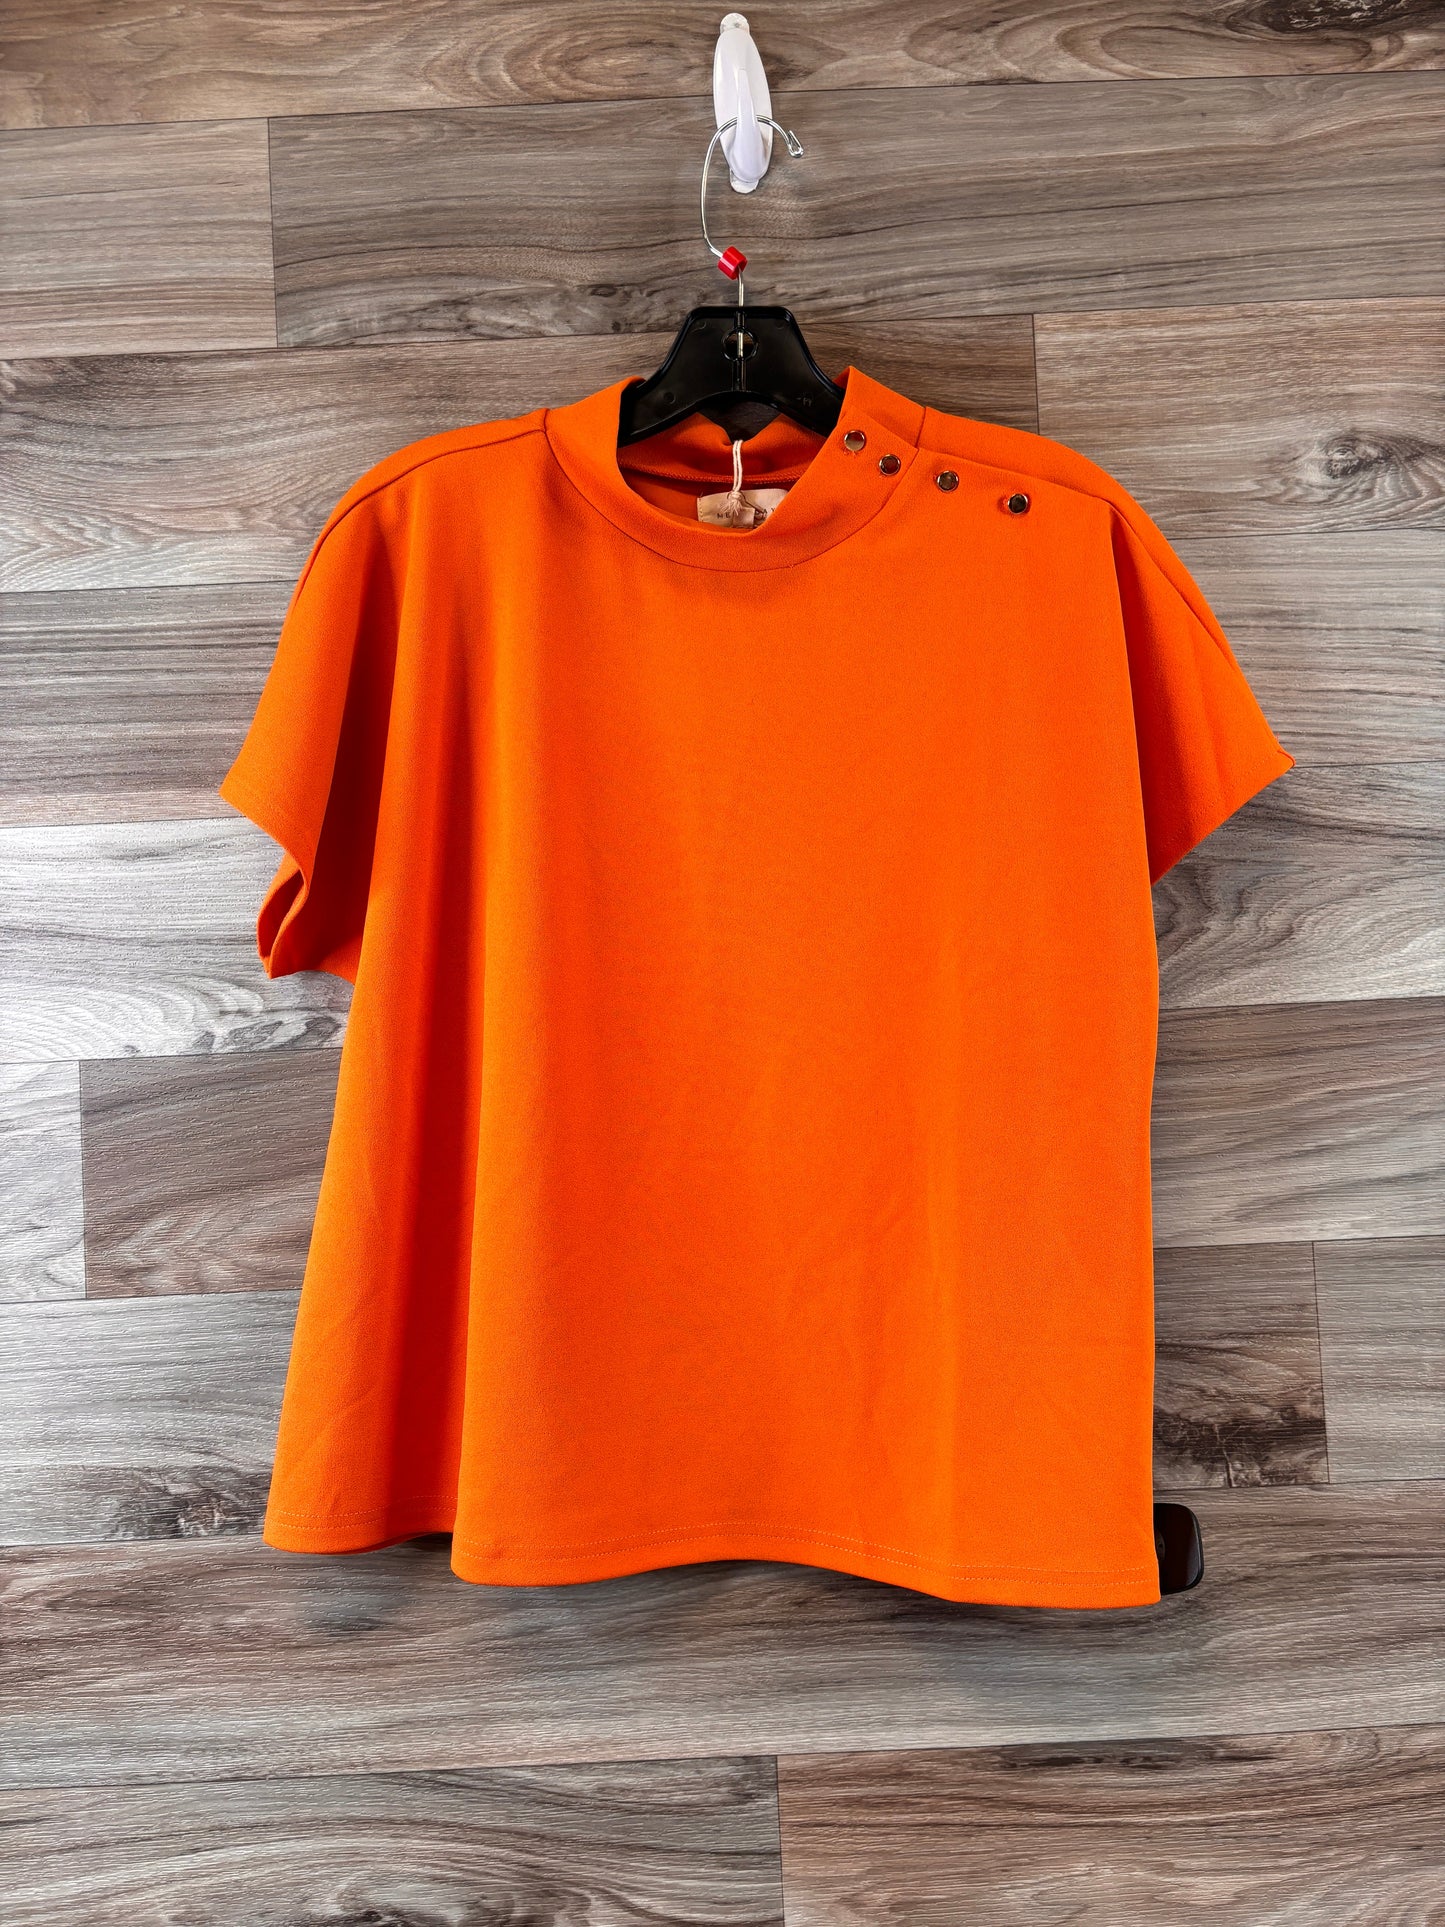 Orange Top Short Sleeve Melloday, Size M